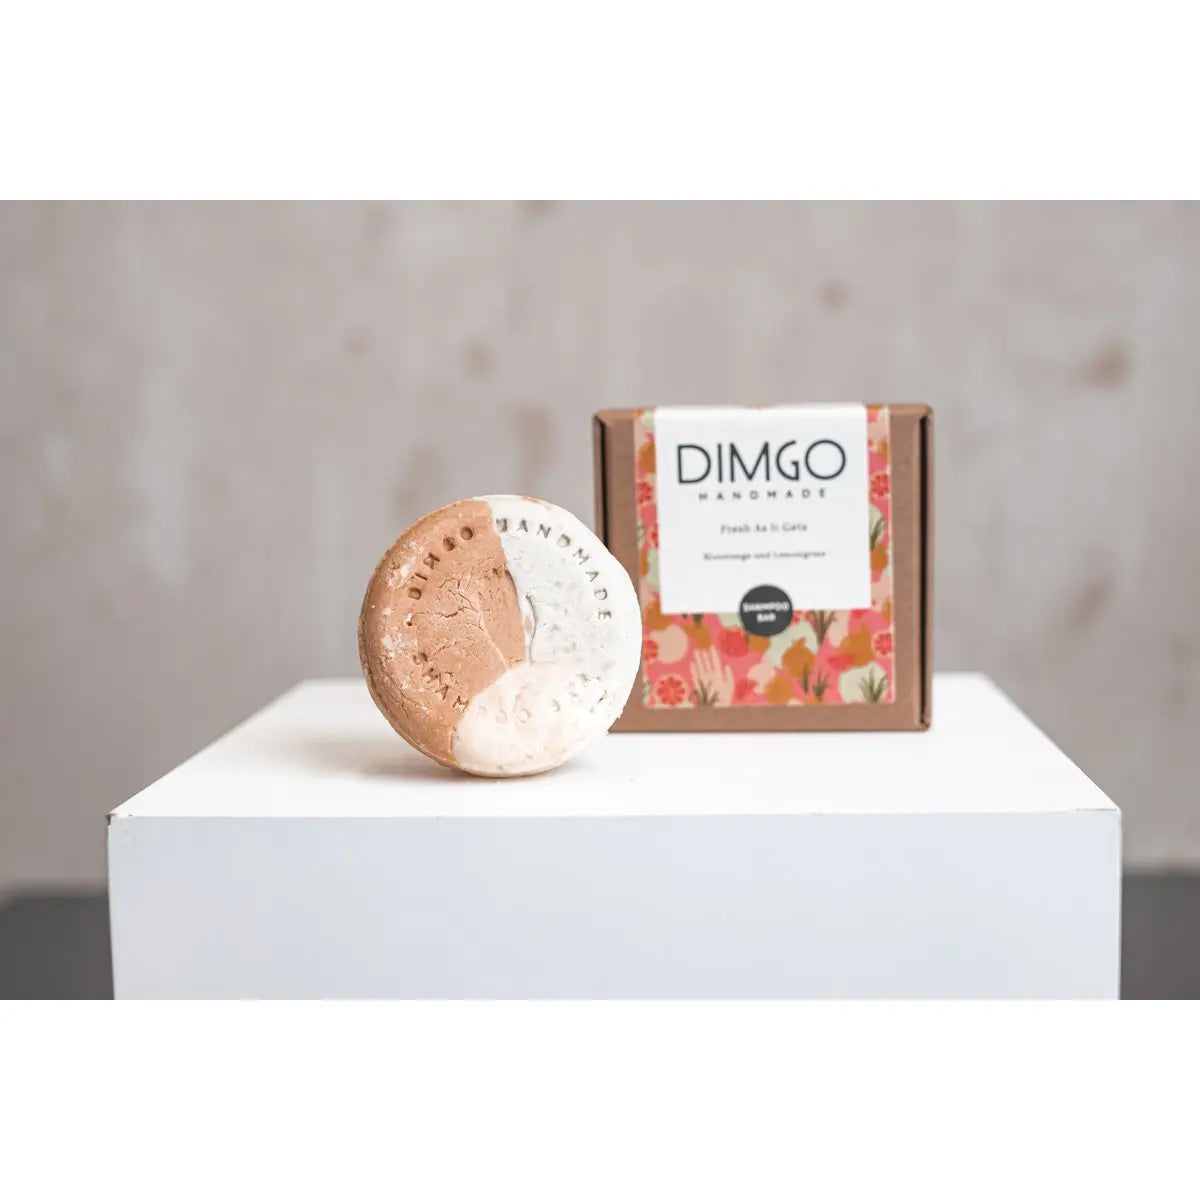 Dimgo handmade shampoobar fresh as it gets handgemaakteskincare